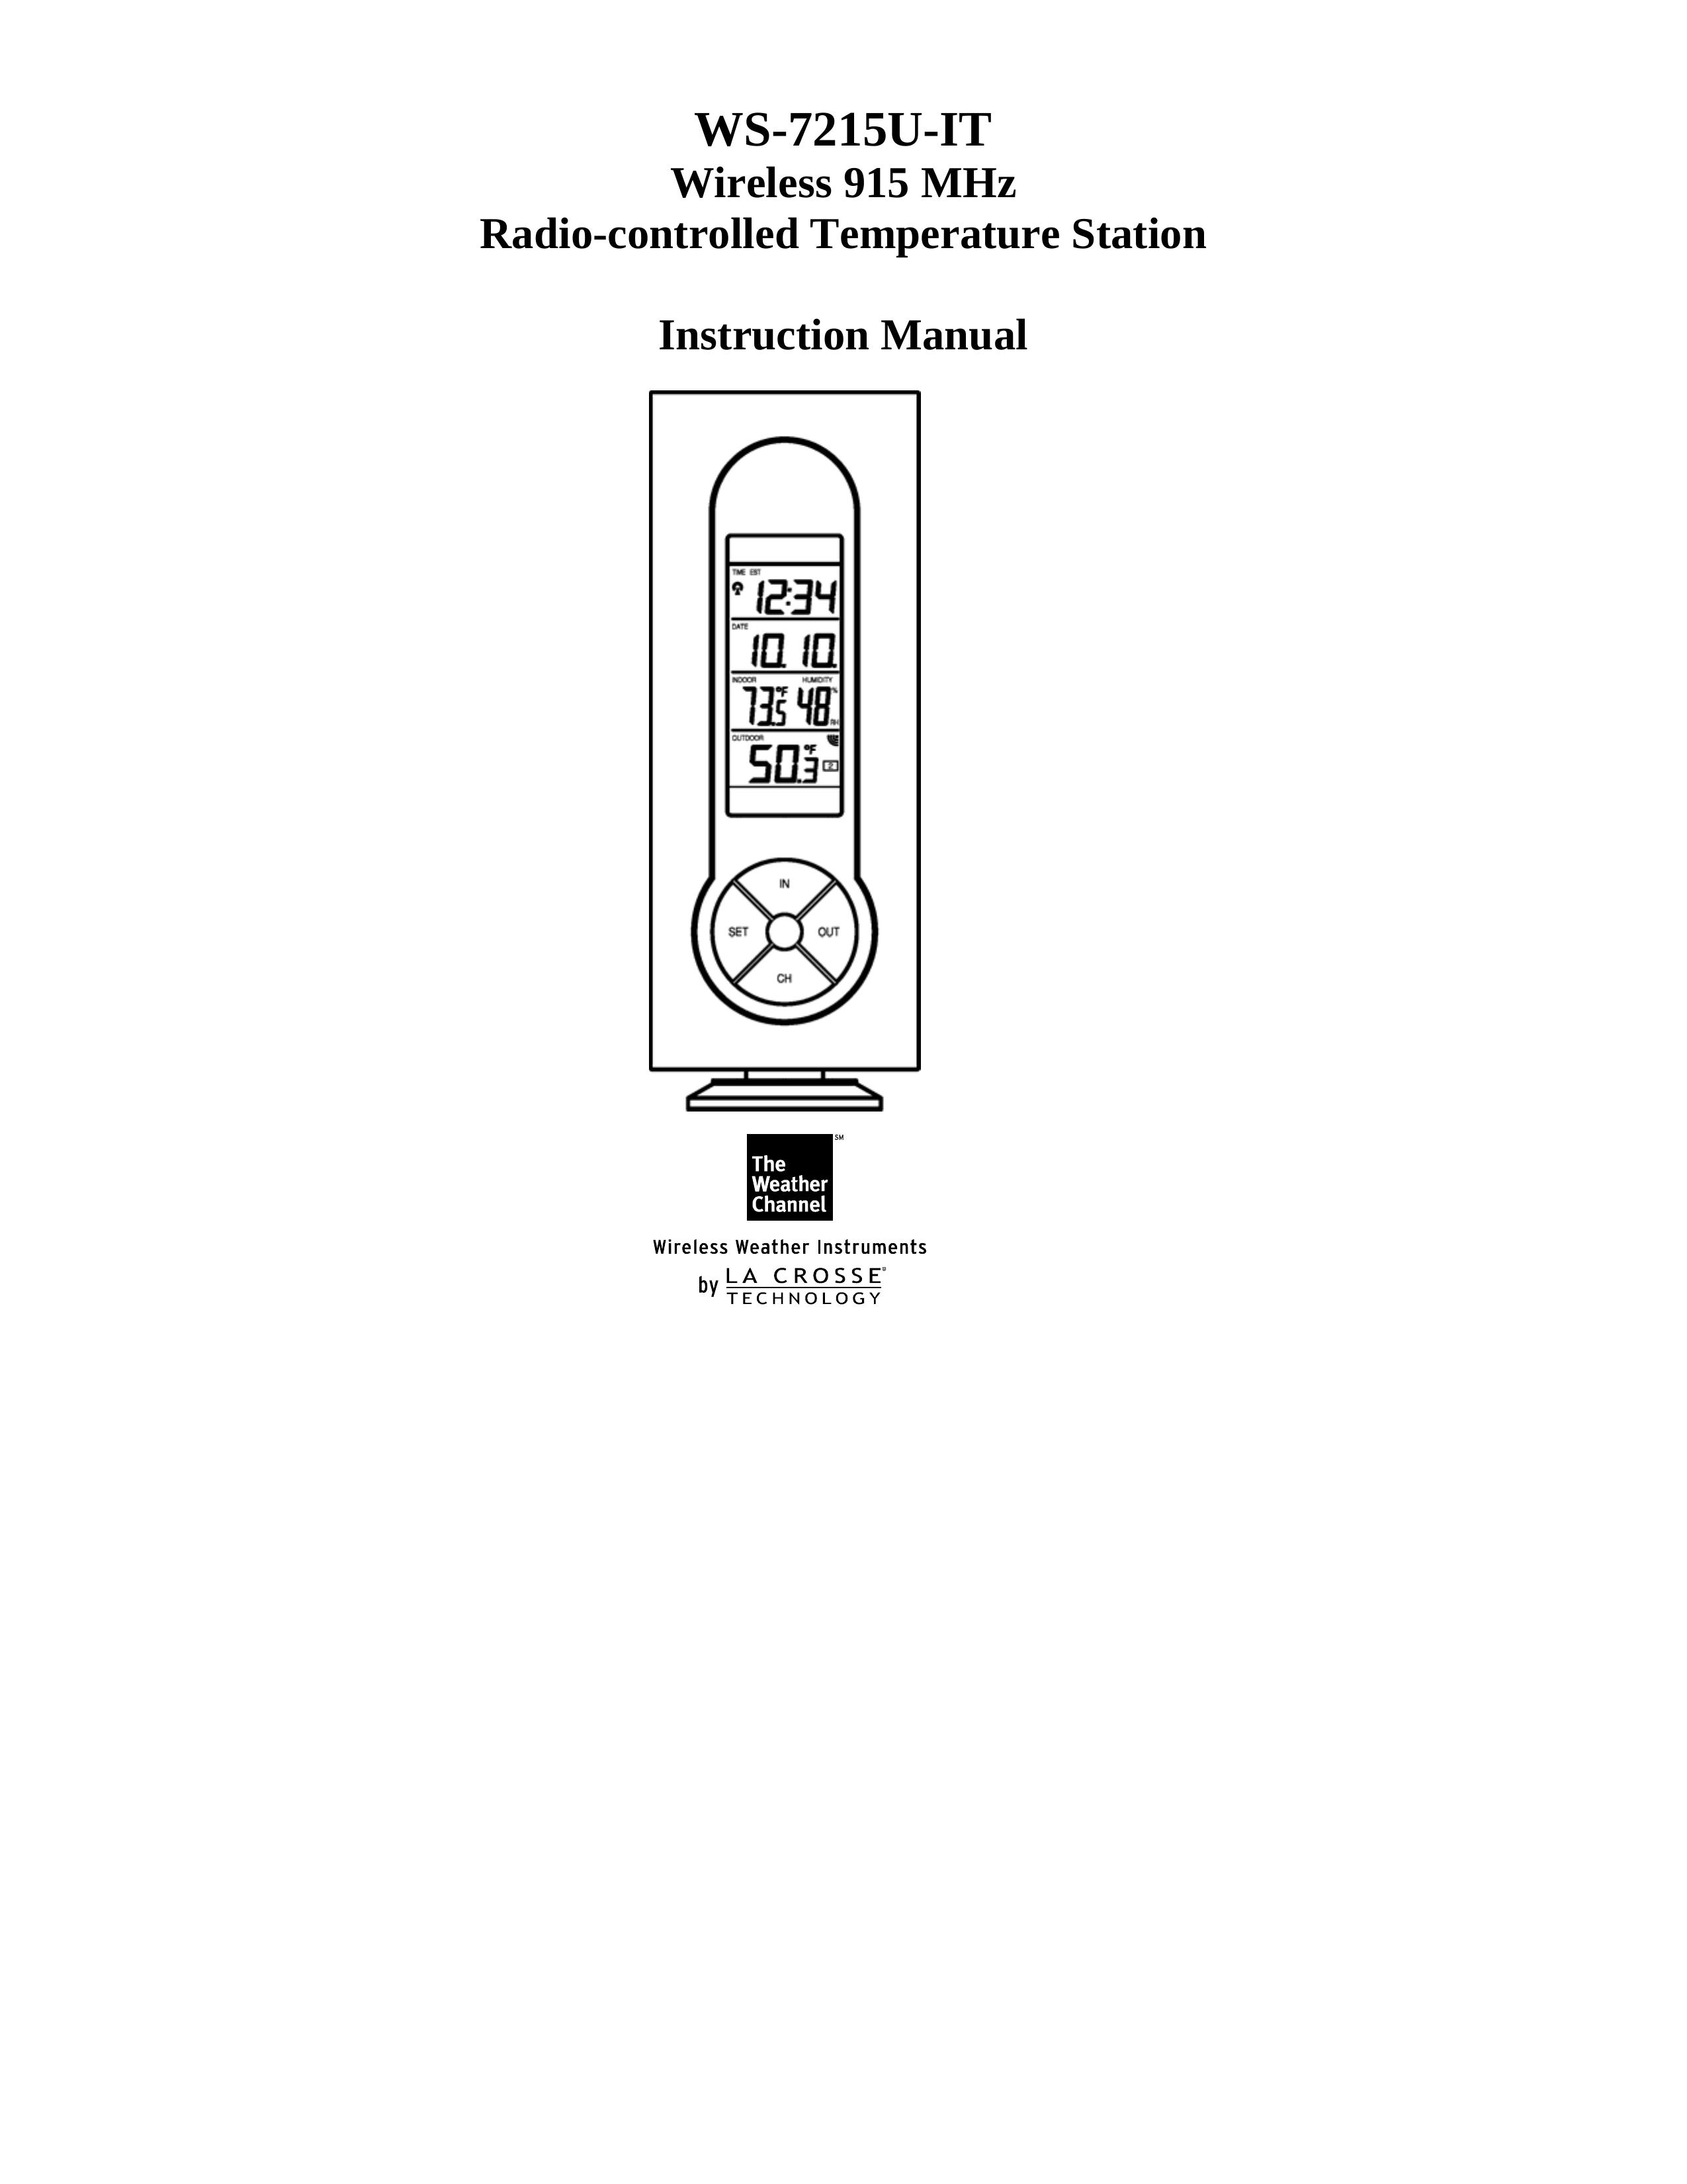 La Crosse Technology WS-7215U-IT Thermometer User Manual